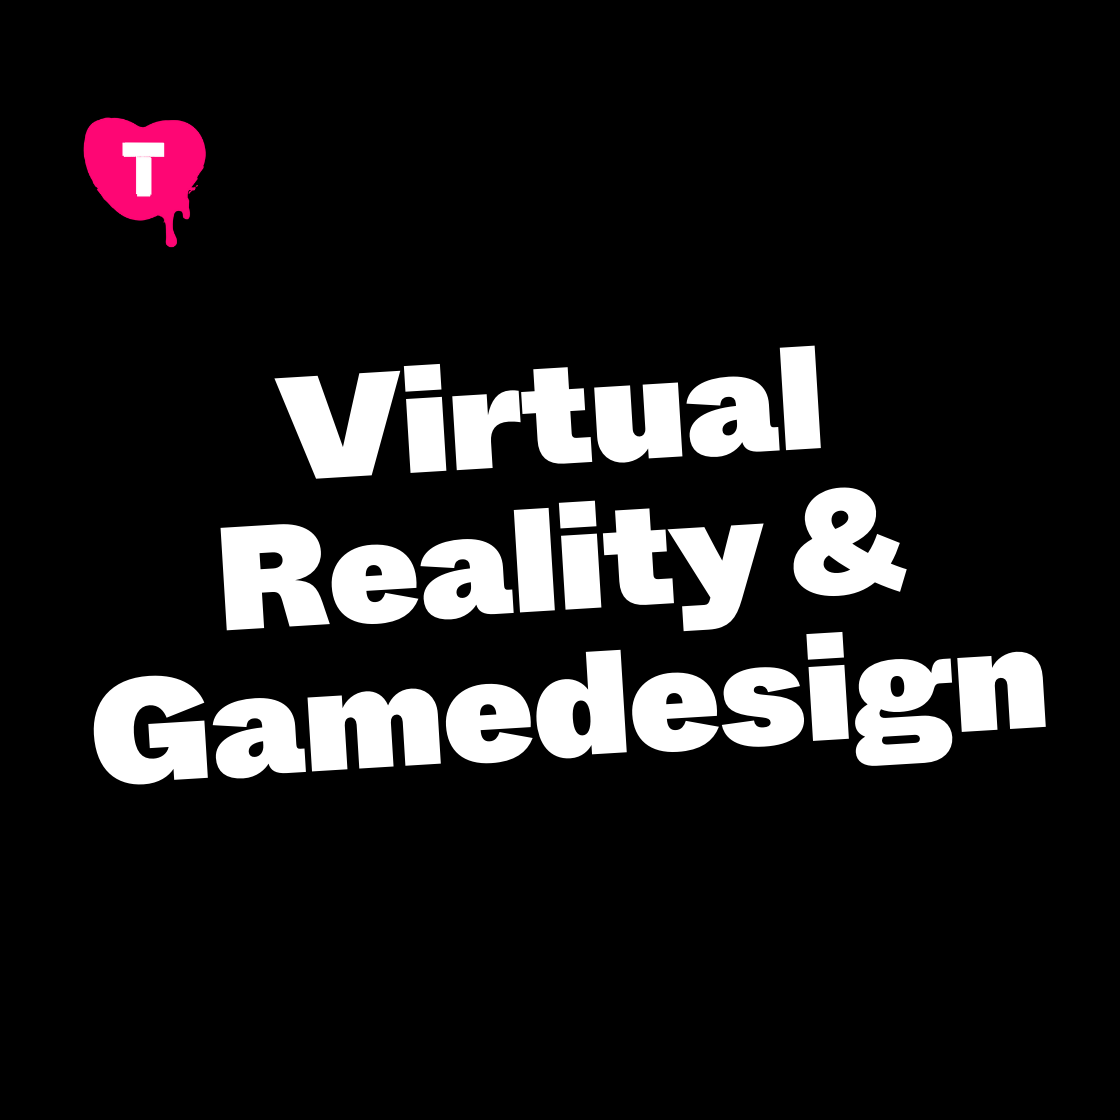 Virtual Reality & Gamedesign